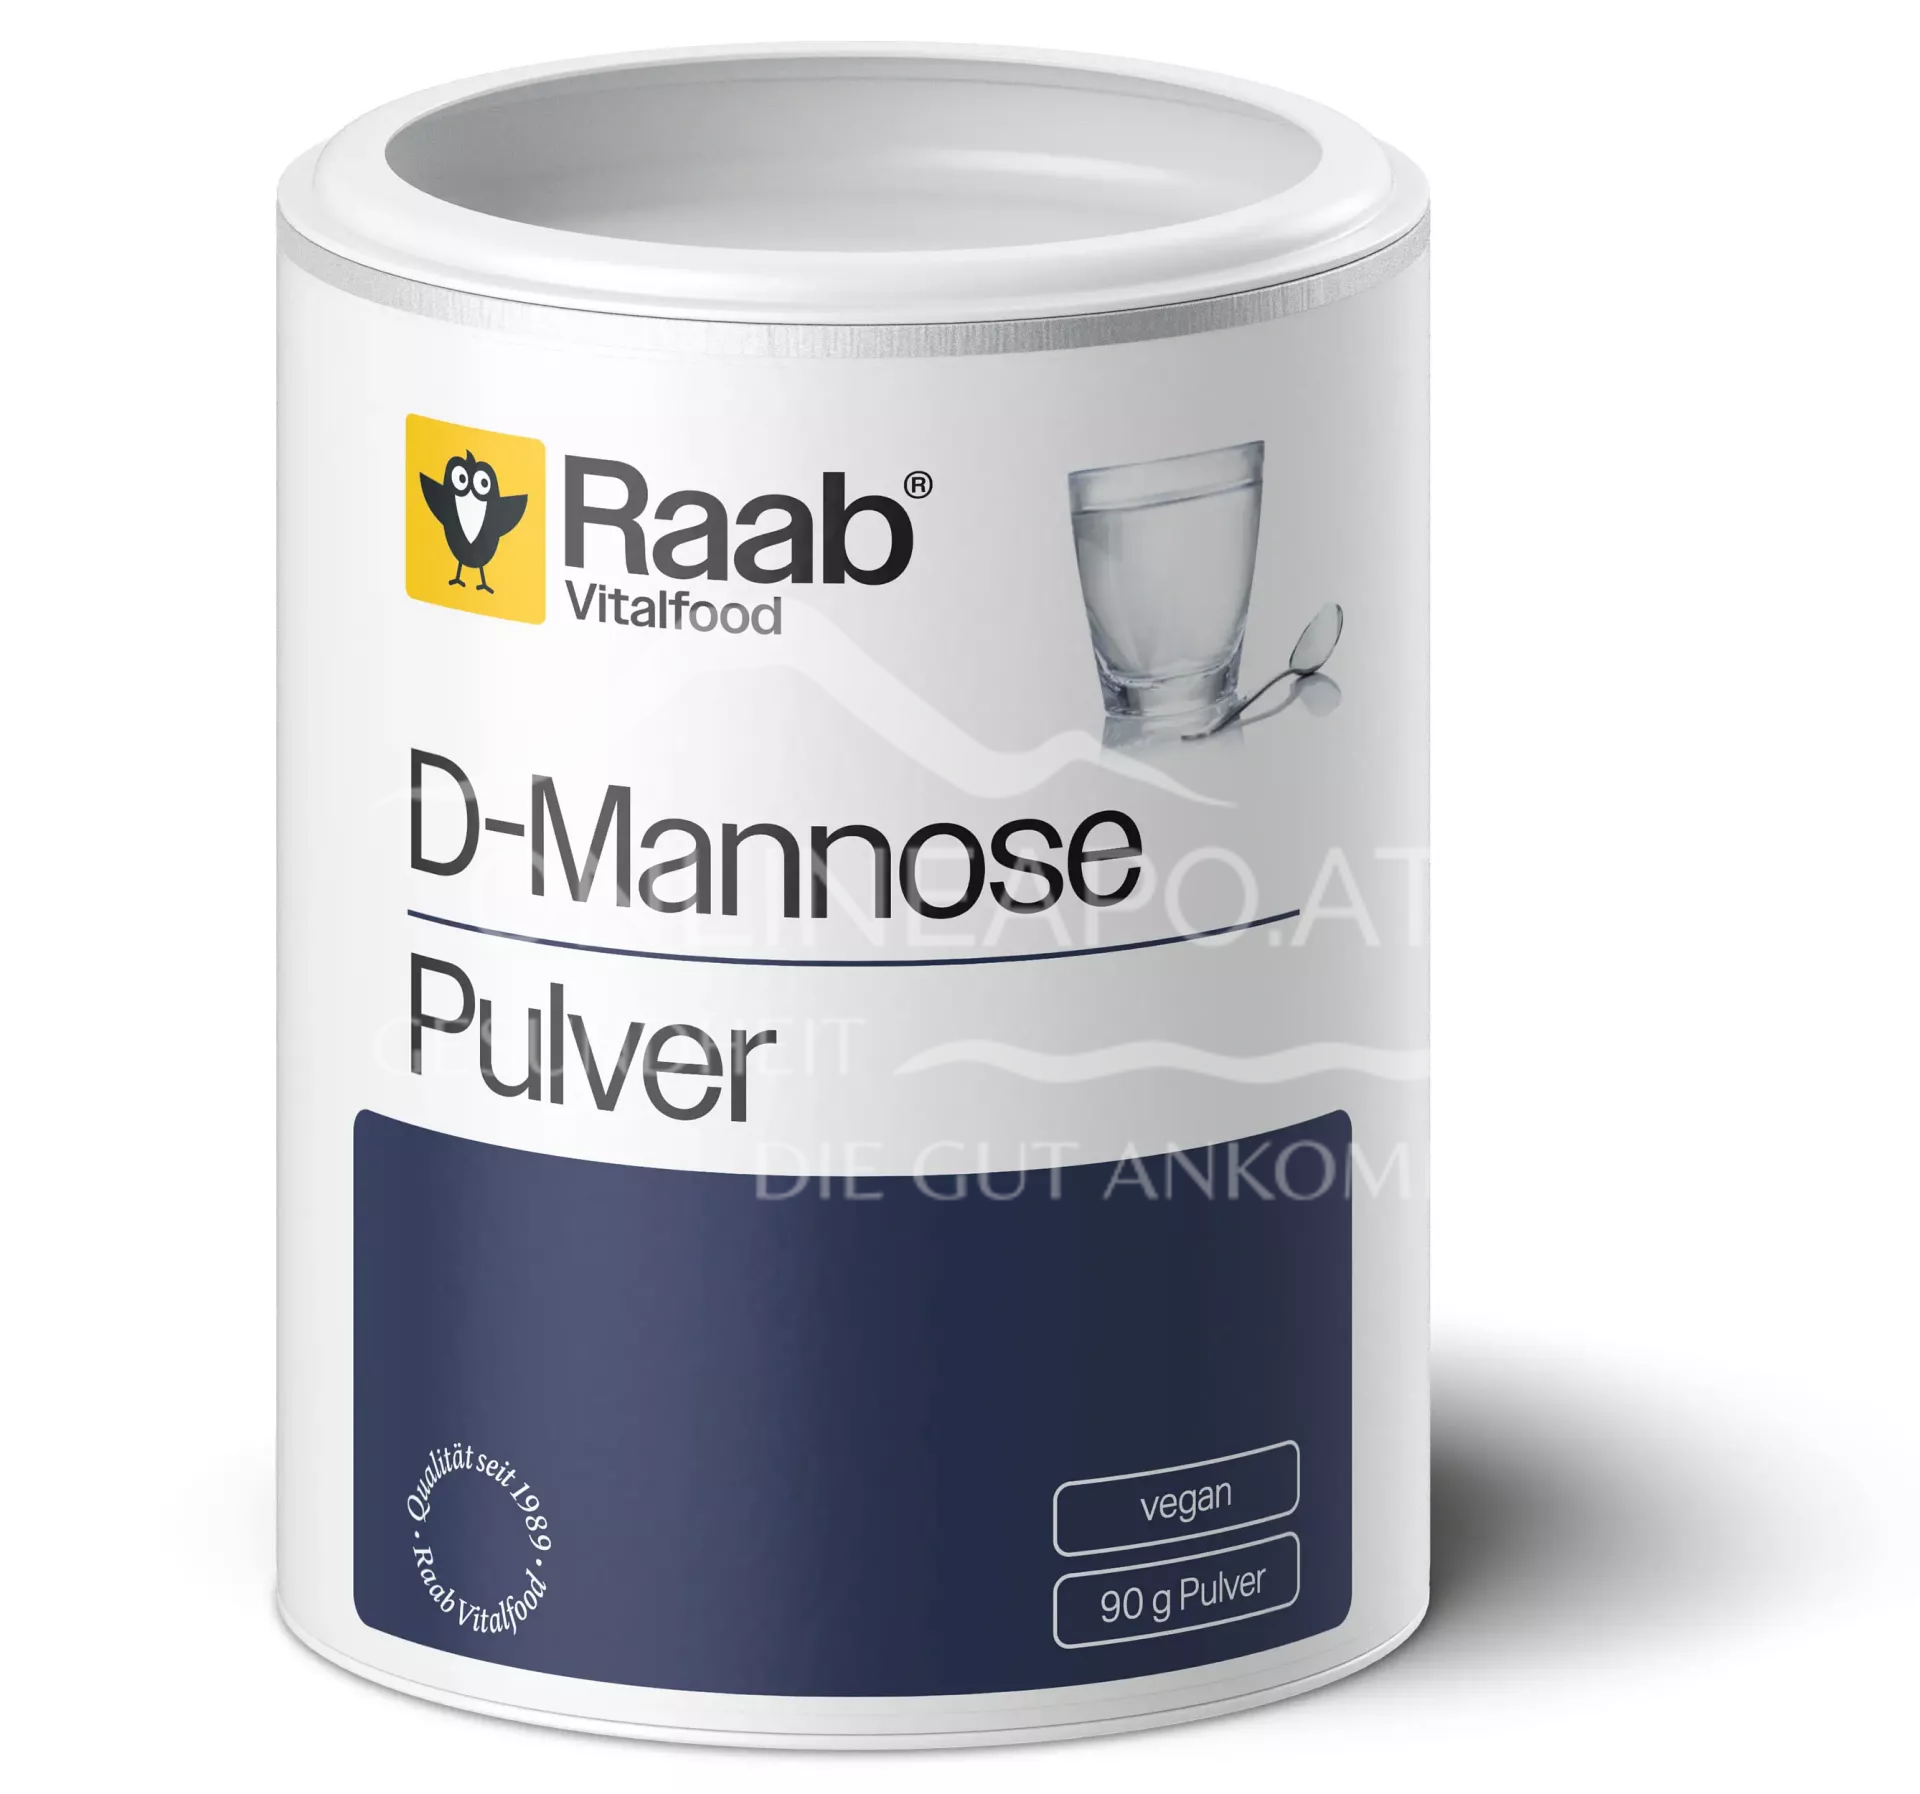 Raab Vitalfood D-Mannose Pulver